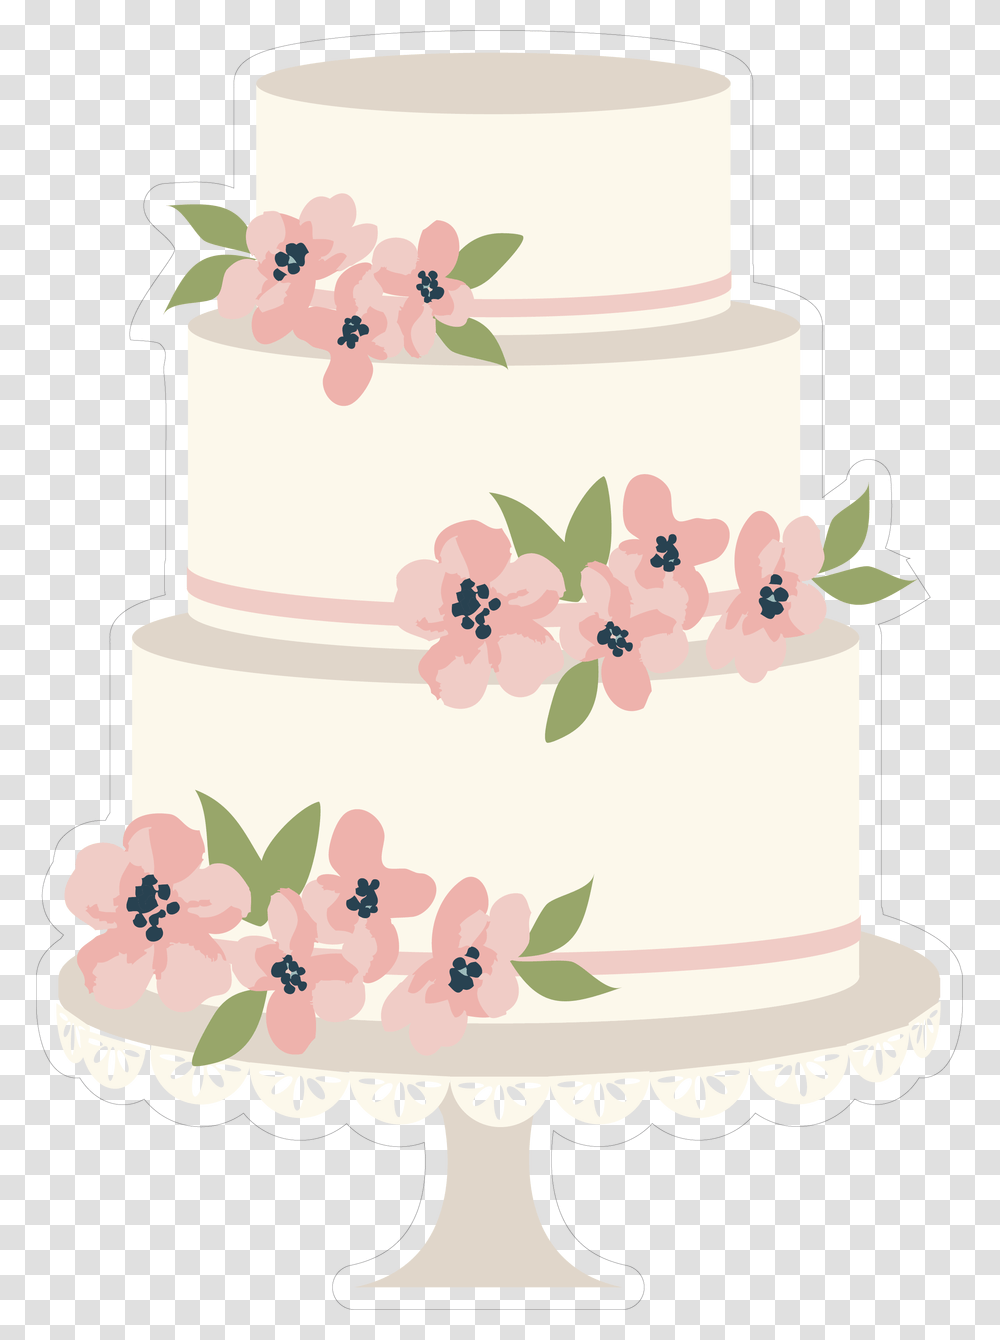 Wedding Cake With Flowers Print Amp Cut File Wedding Cake, Dessert, Food, Birthday Cake, Icing Transparent Png